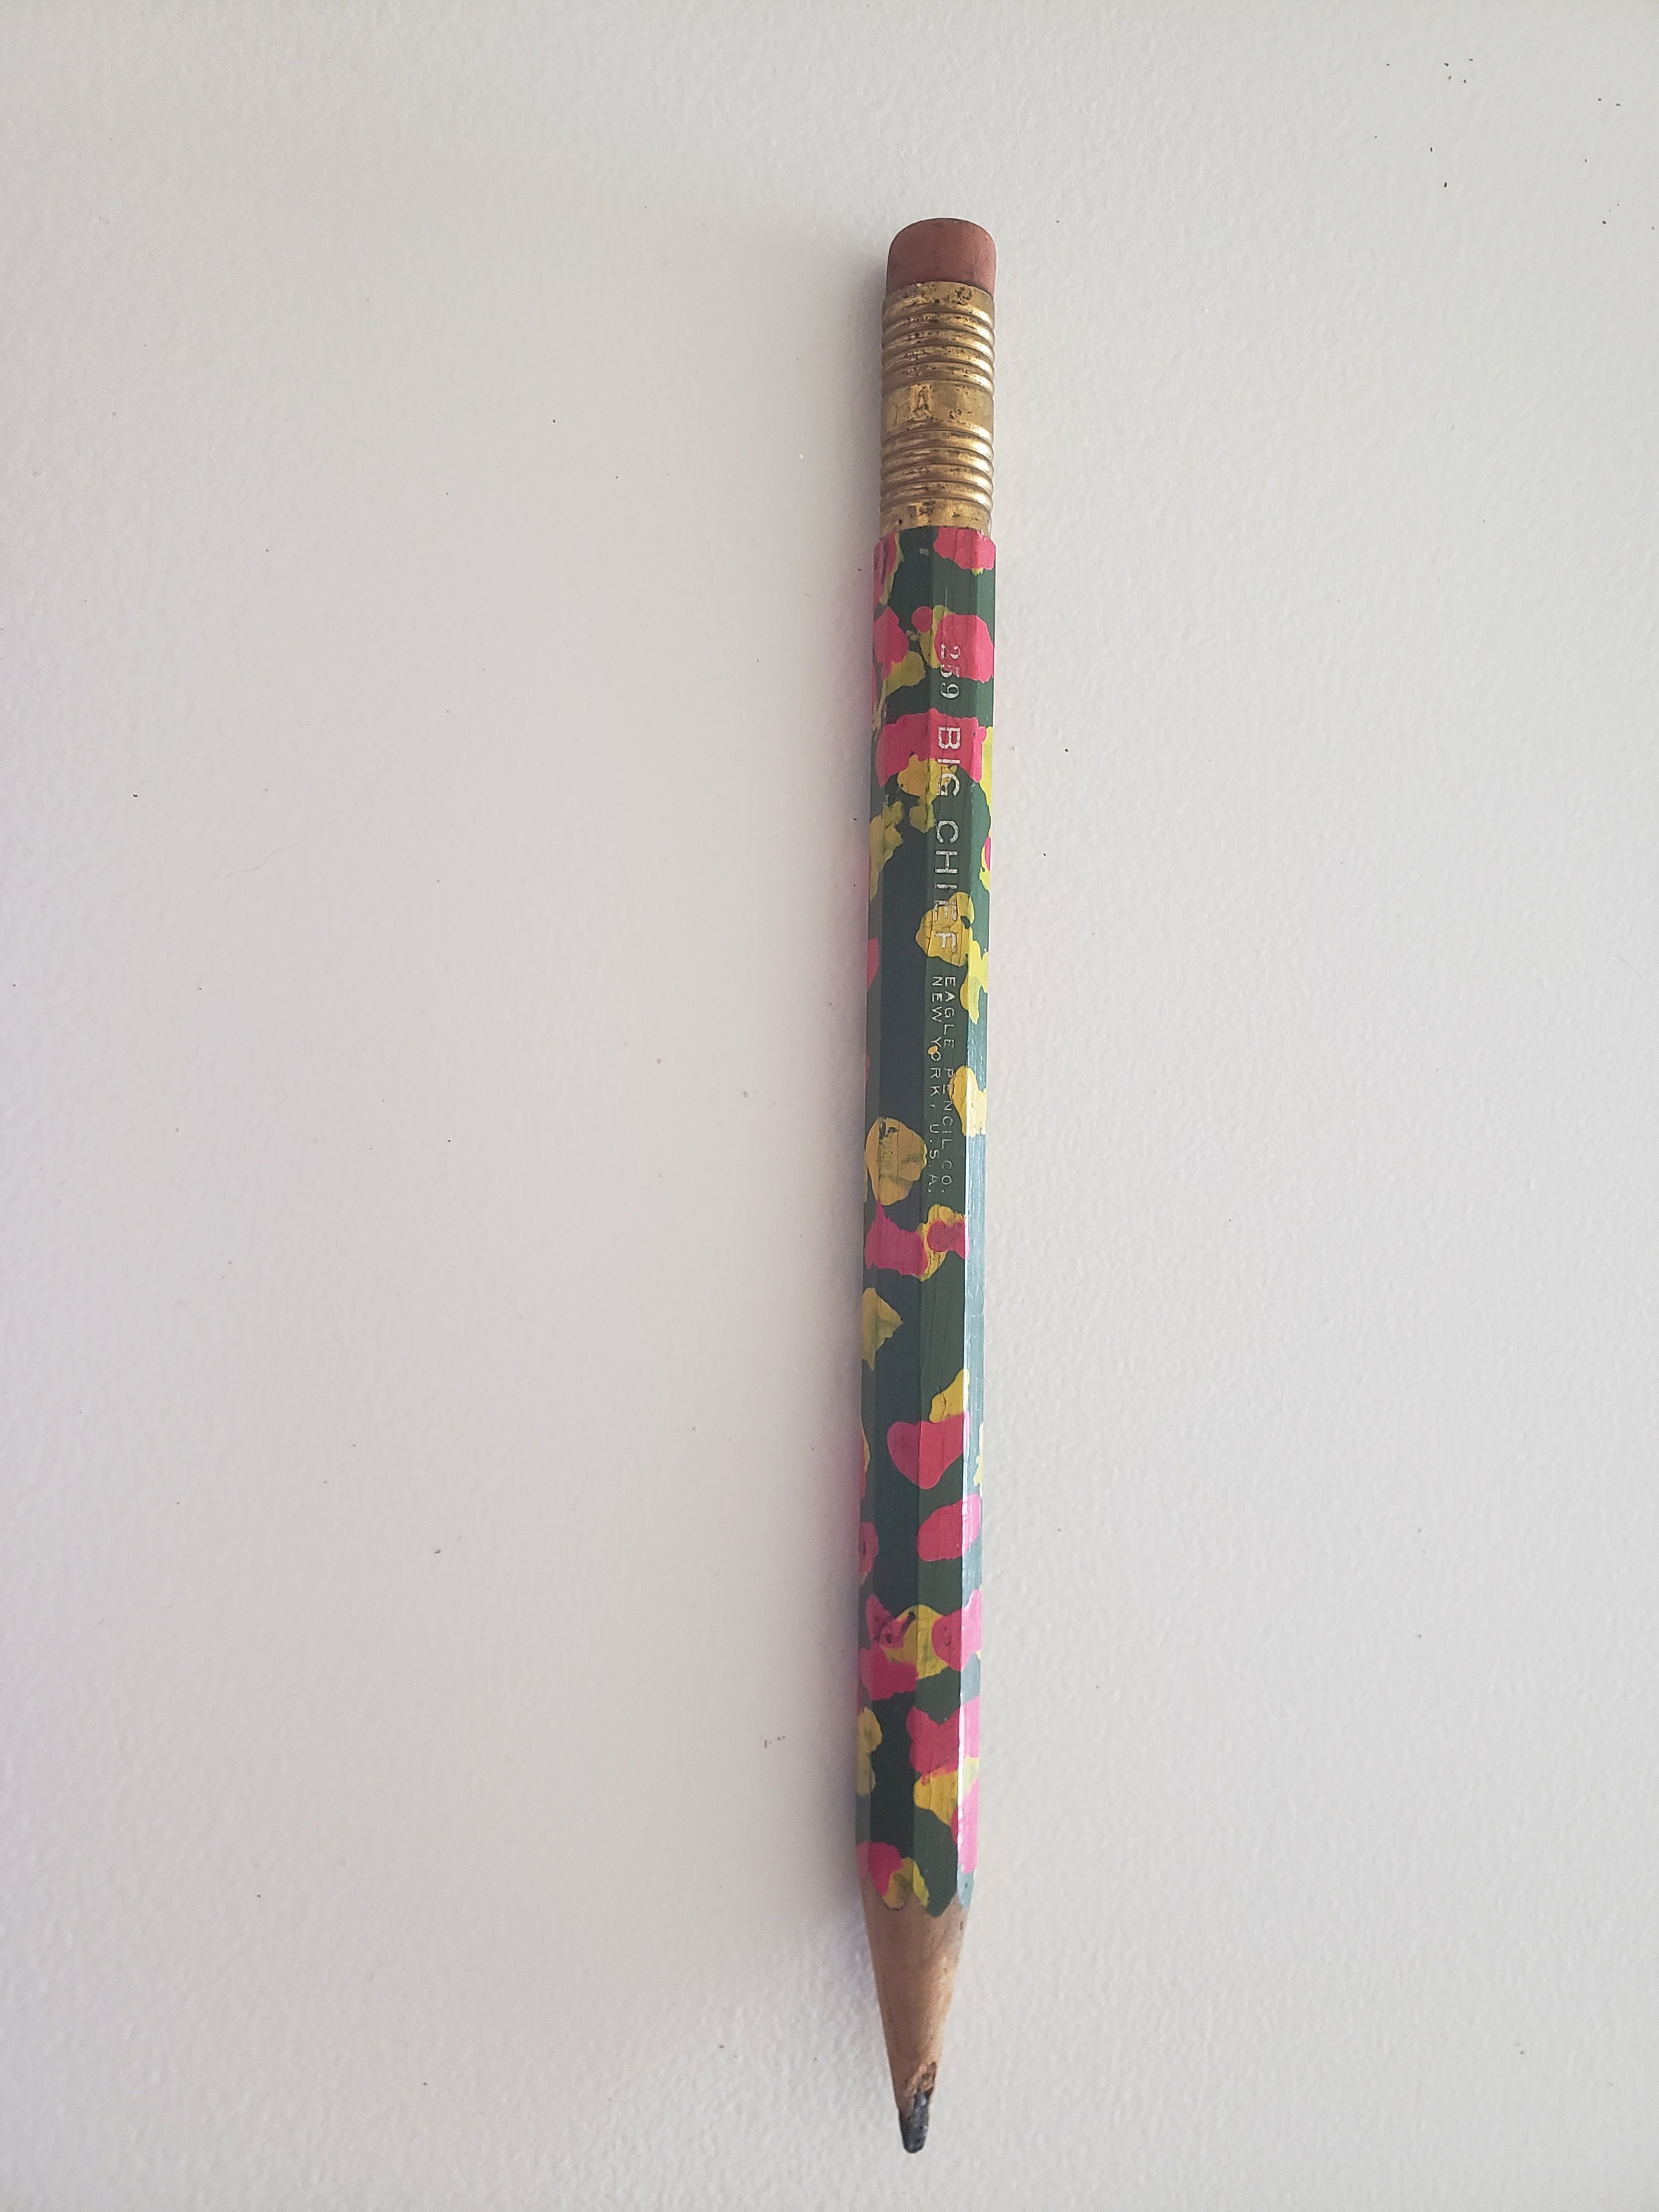 Vintage Big Pencil / Wooden Pencil / Large Wooden Pencil / Rare Pencil /  Writing Instruments / Artist Pencil / Collectible Pencil 